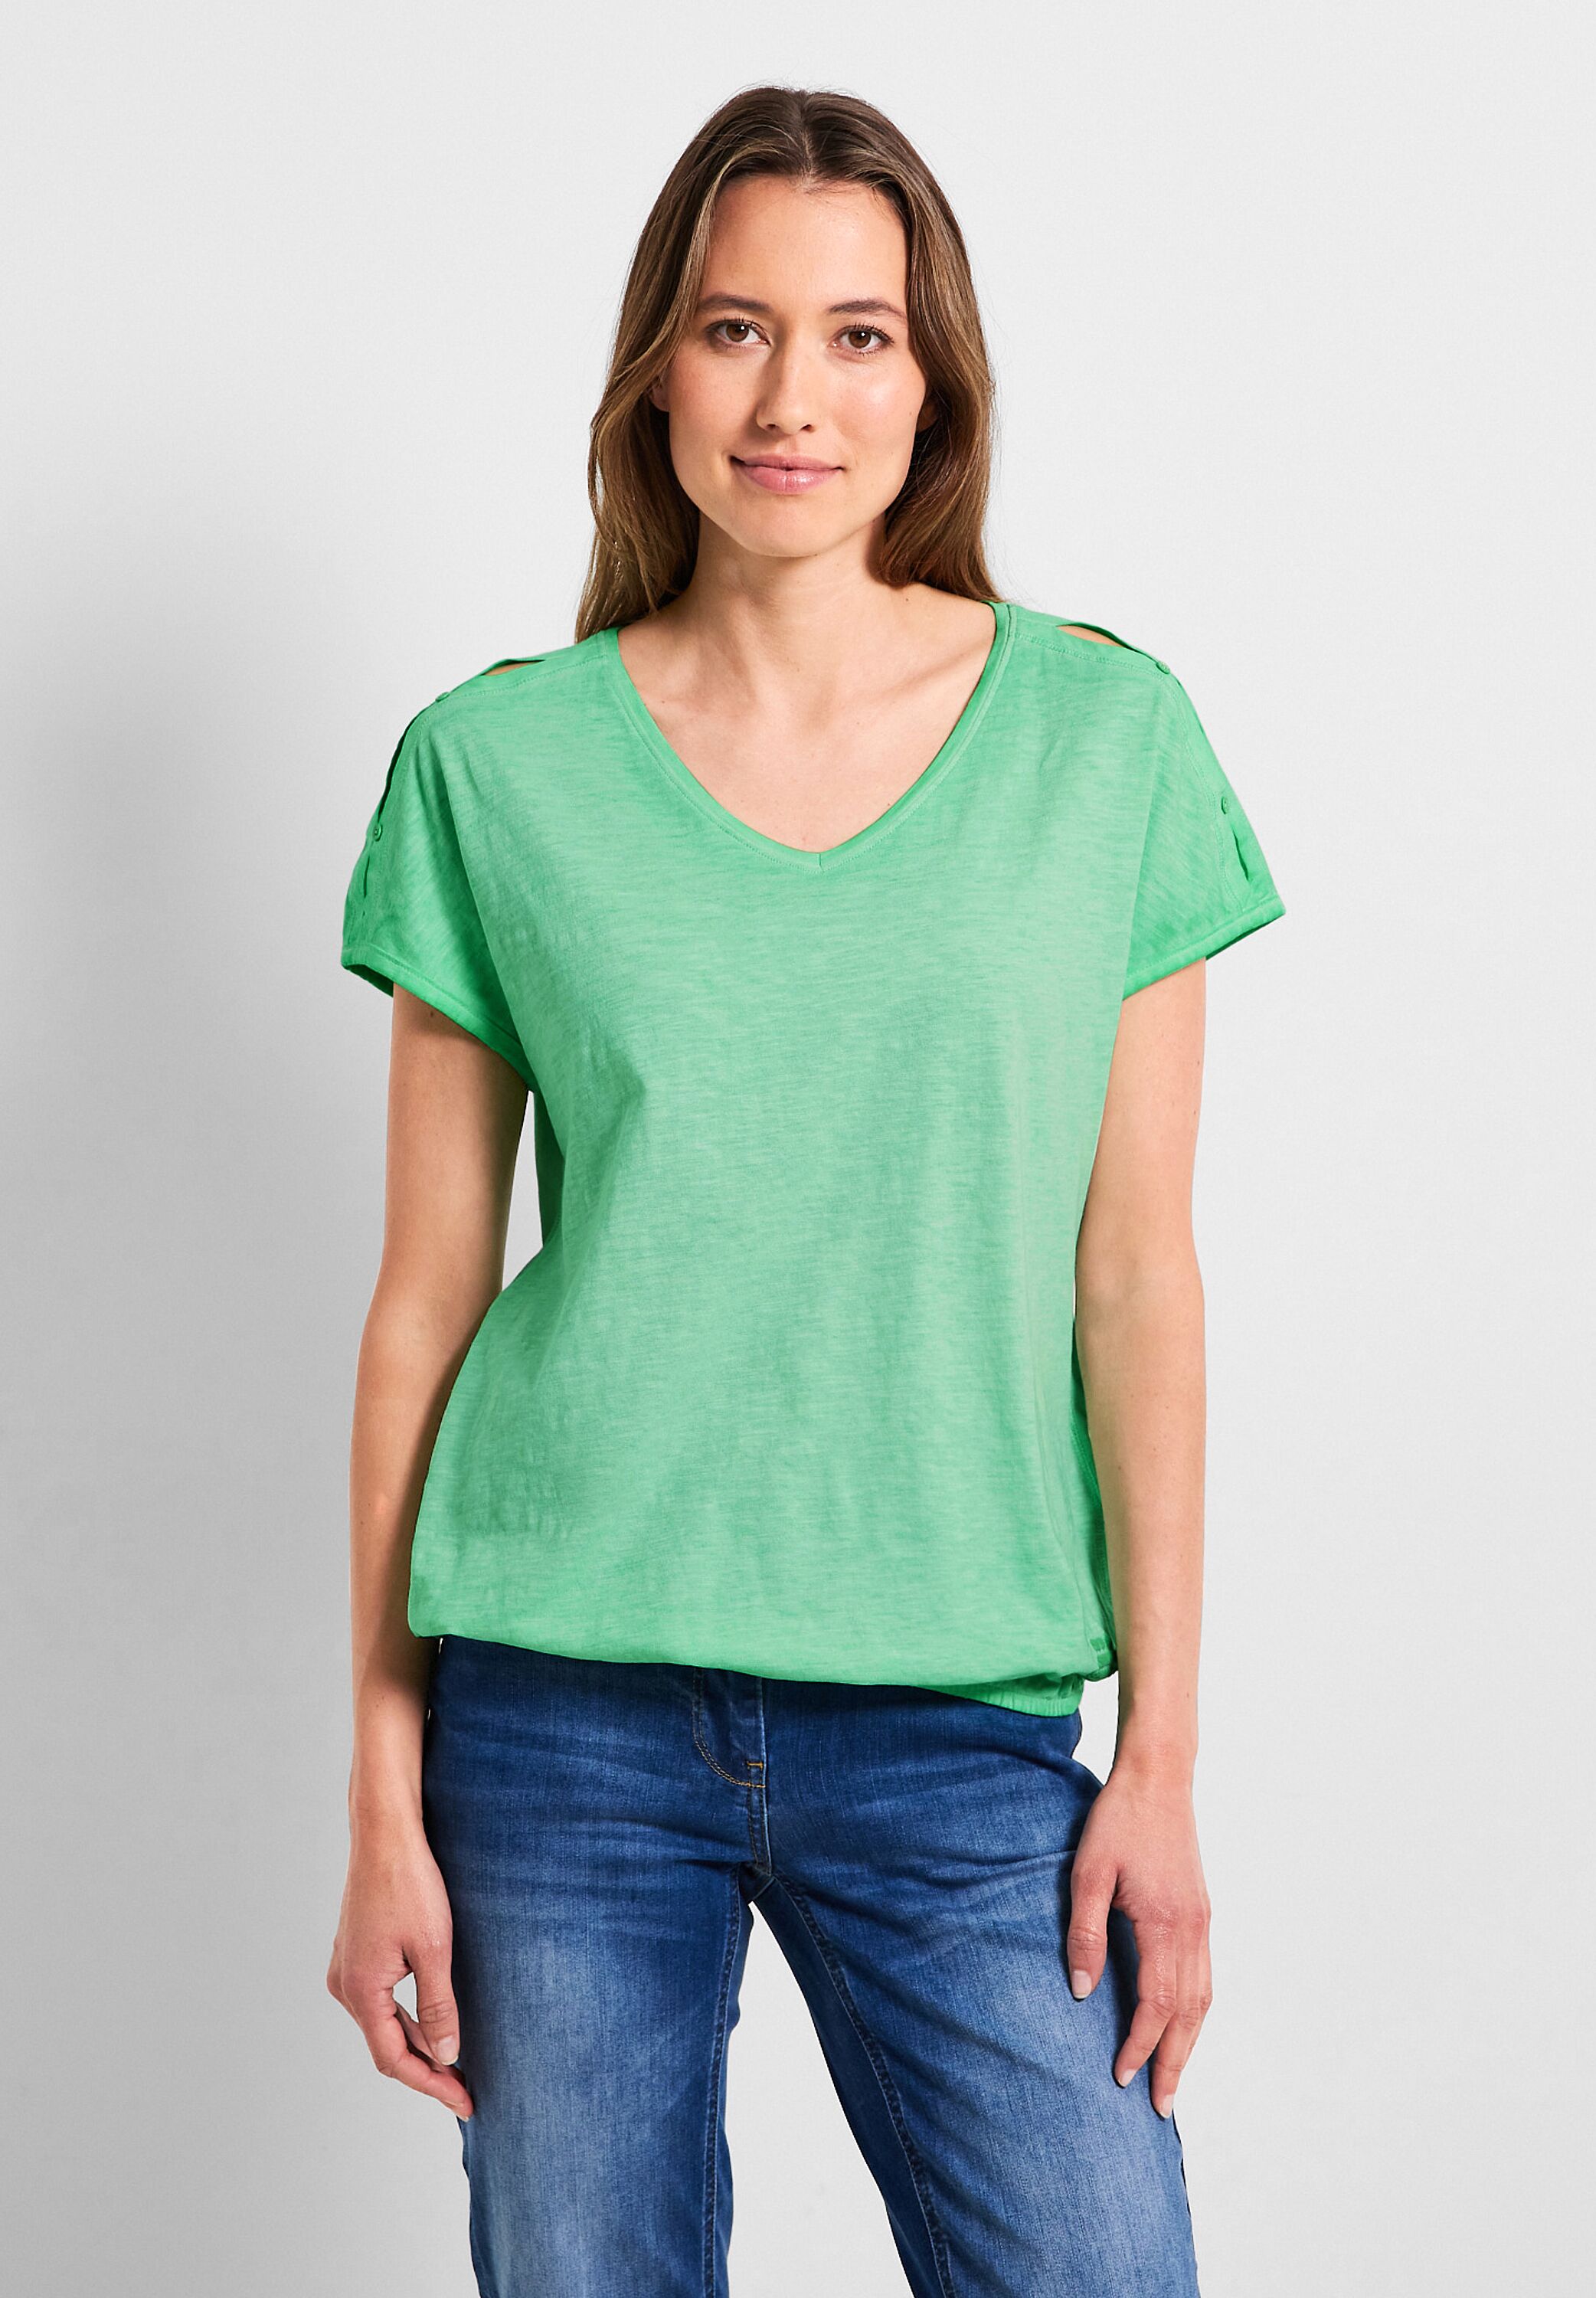 CECIL T-Shirt in Fresh Green SALE Mode reduziert - im B320028-14794 CONCEPT